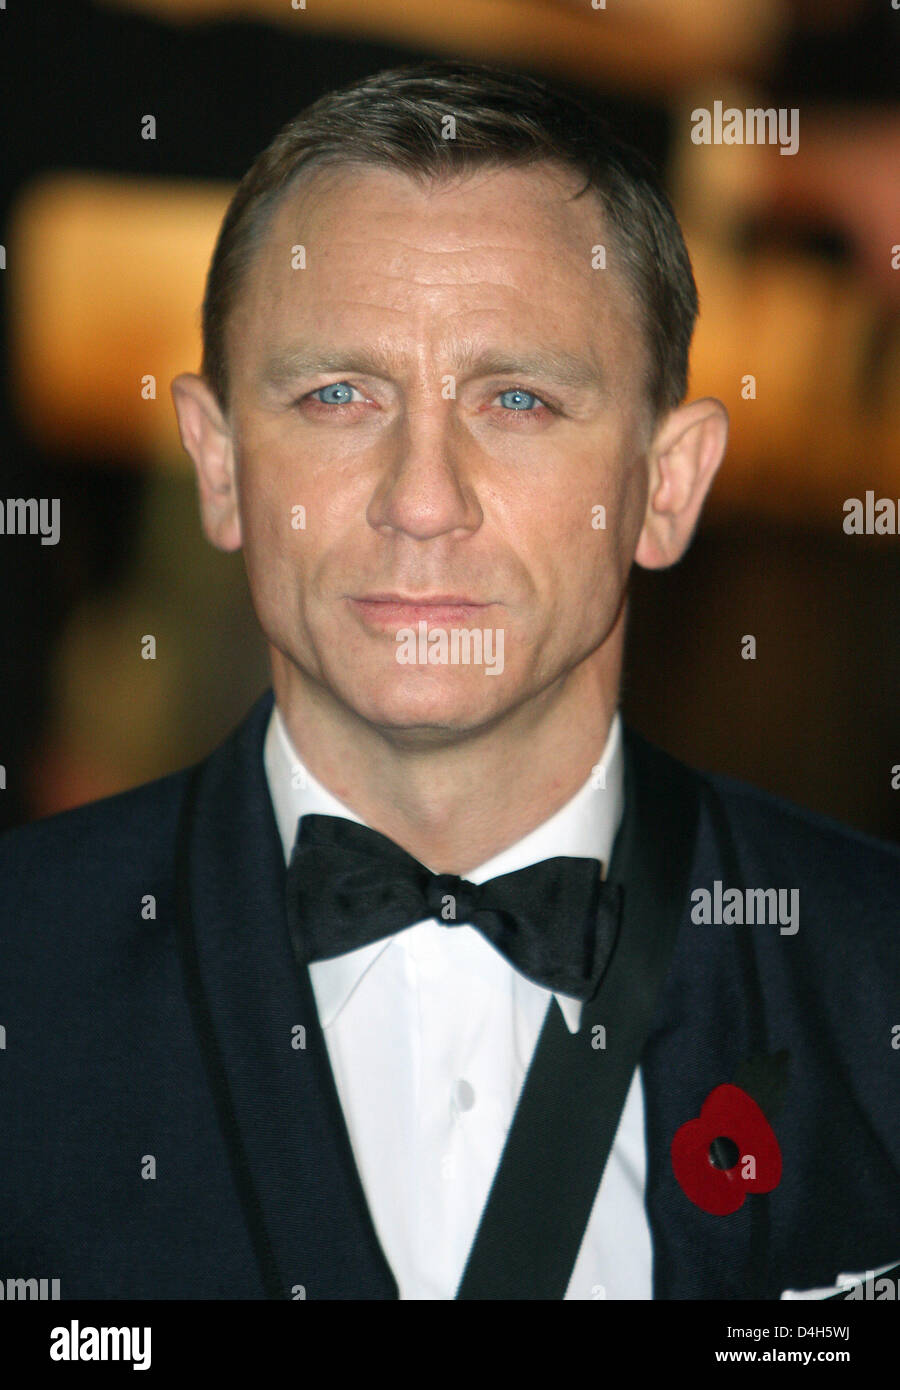 Daniel Craig, who stars as James Bond, arrives for the world premiere ...